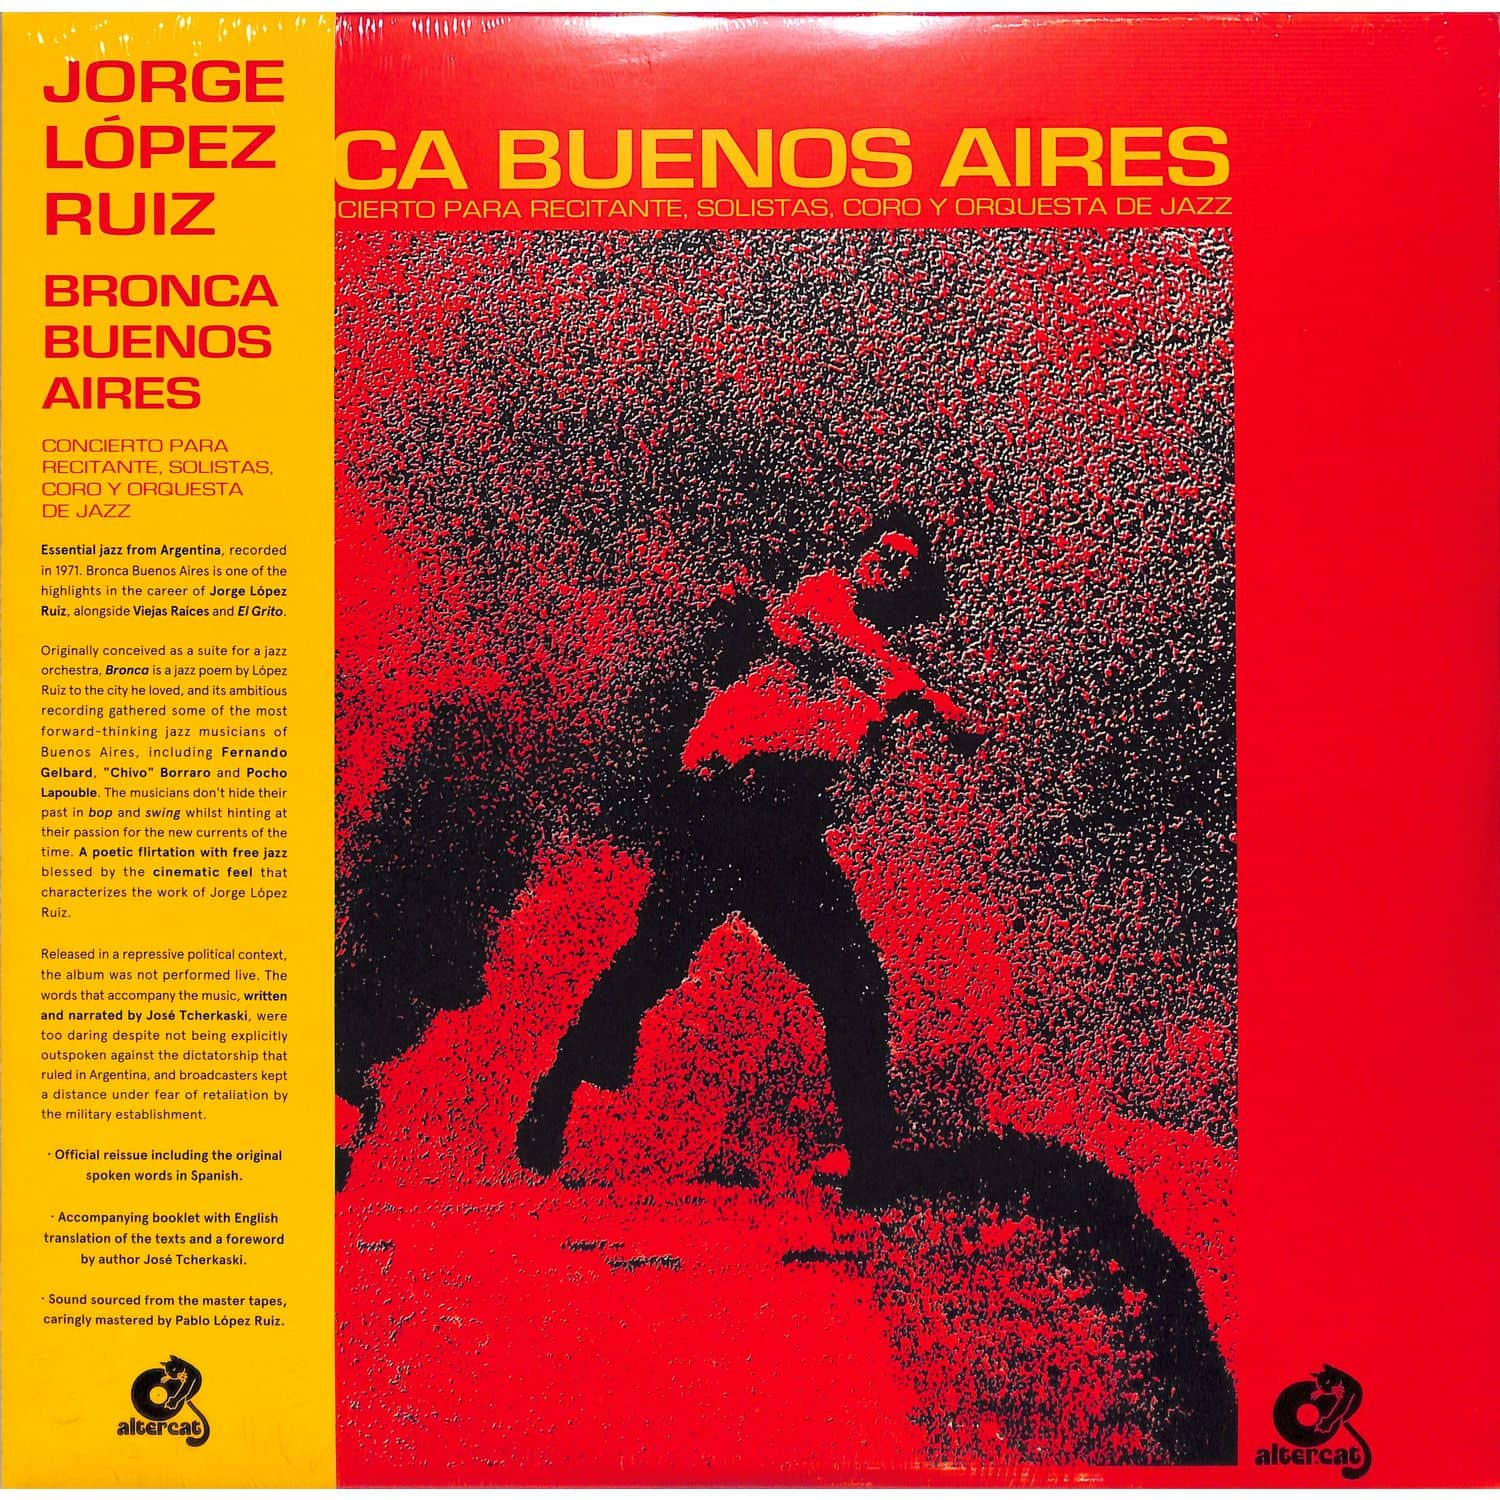 Jorge Lopez Ruiz - BRONCA BUENOS AIRES